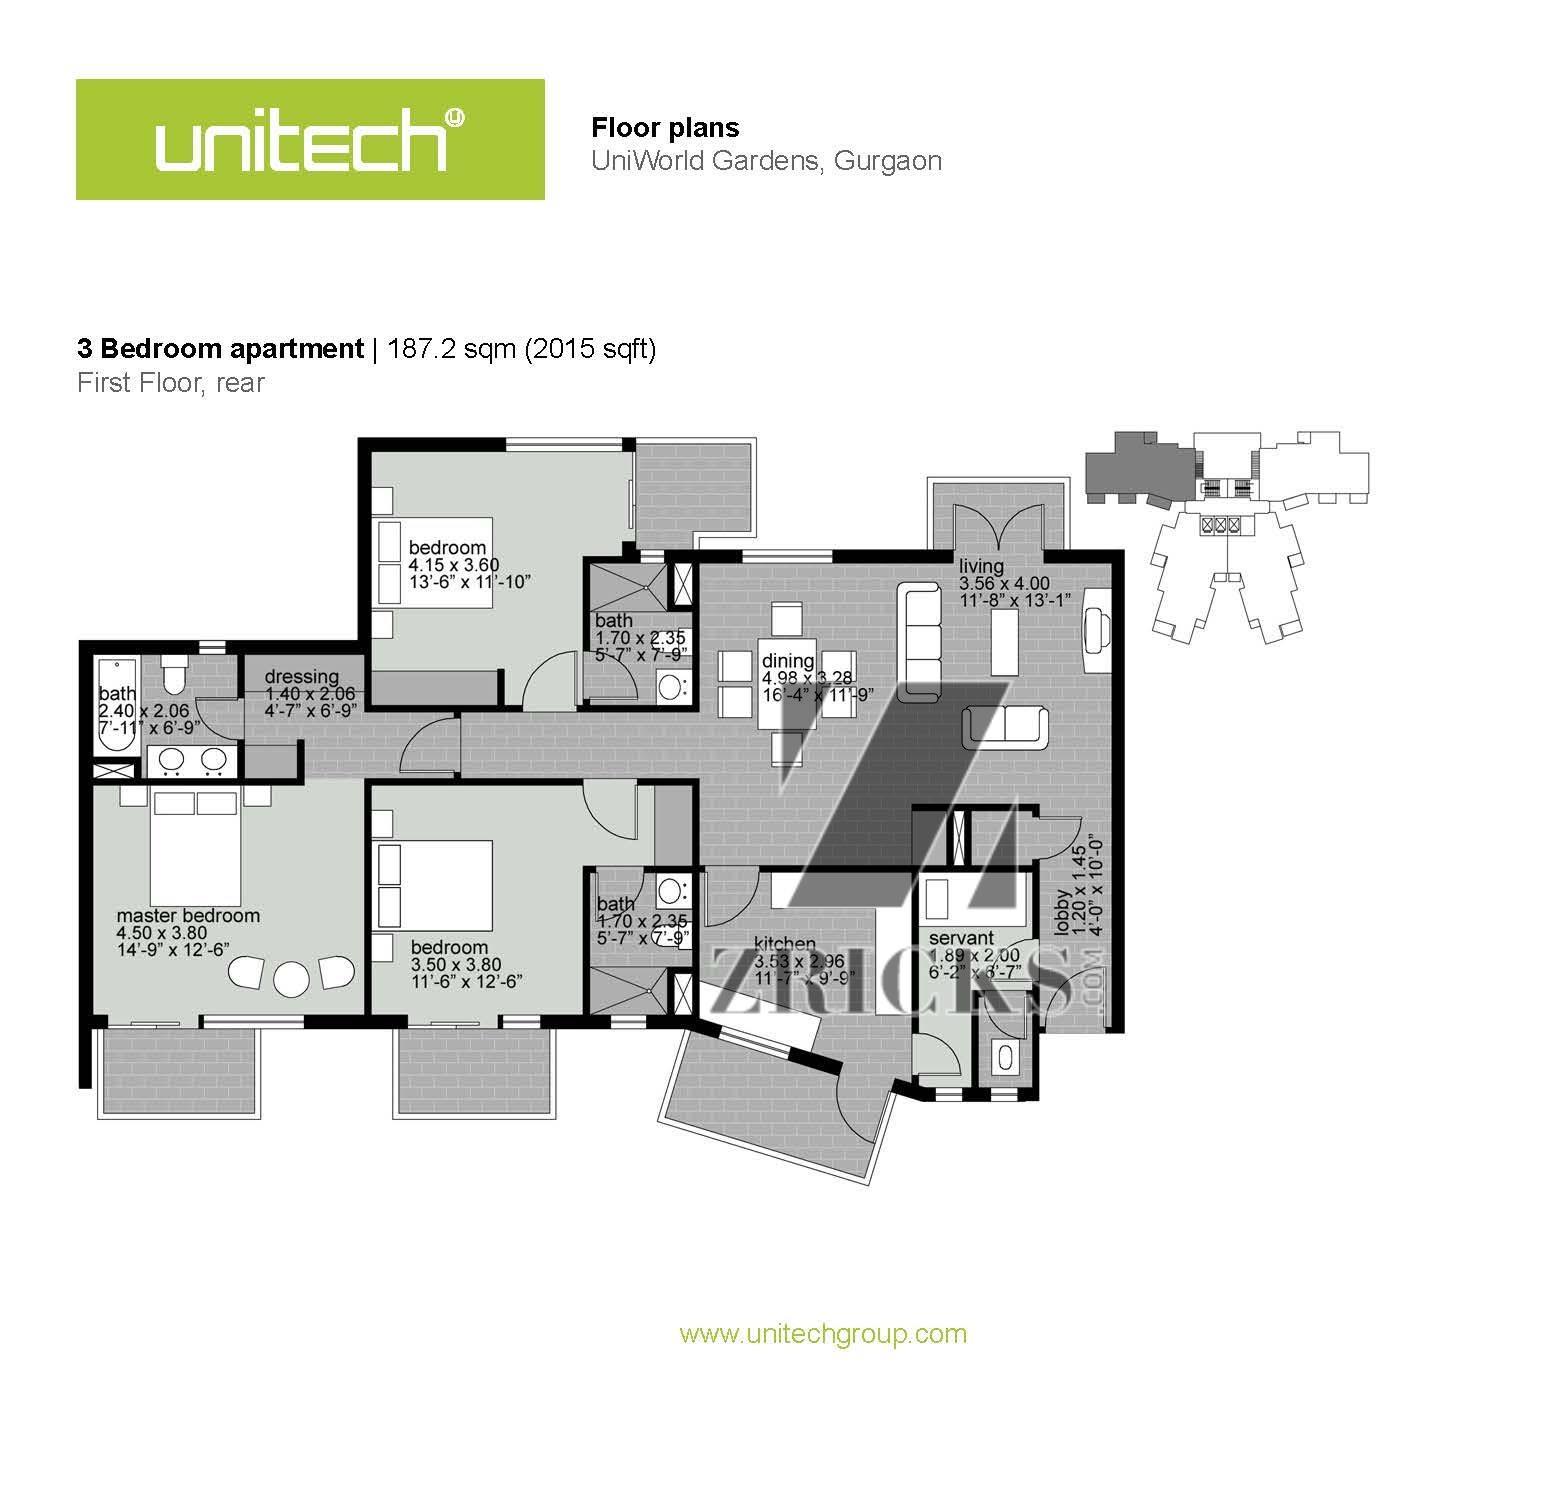 Unitech Uniworld Gardens I Floor Plan